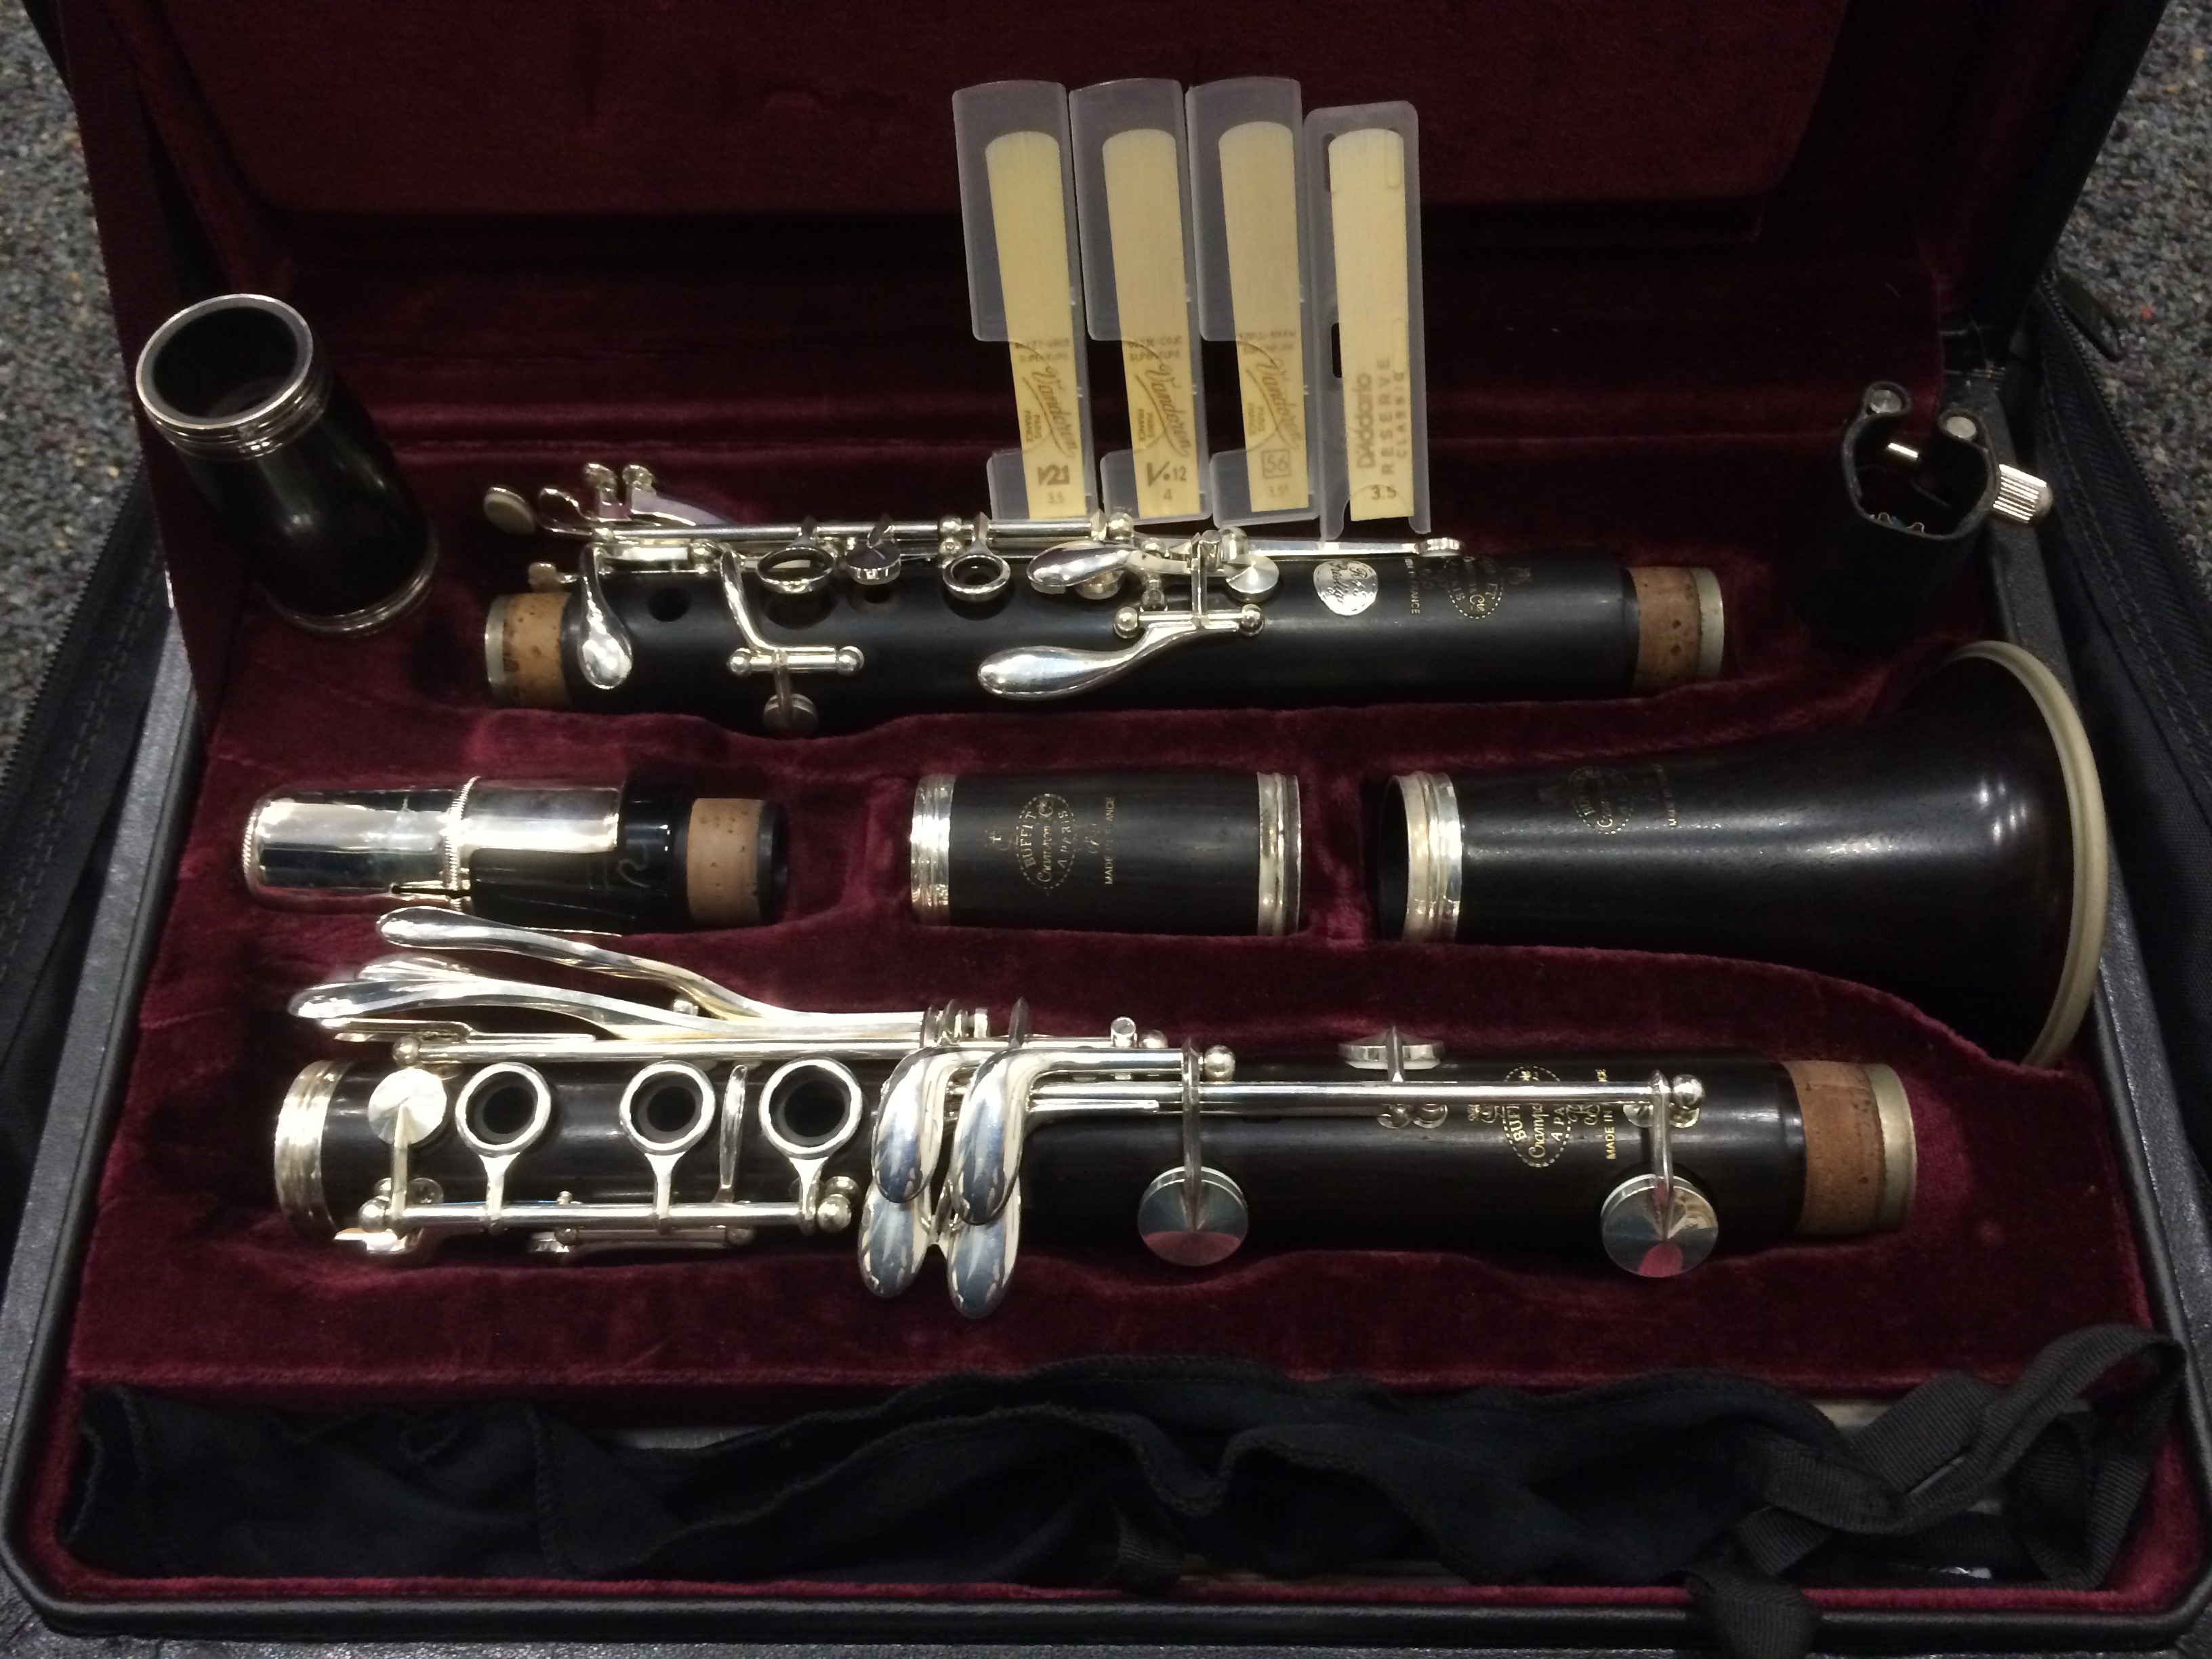 My Clarinet (minus my plastic reeds, german mouthpiece, and german barrel)